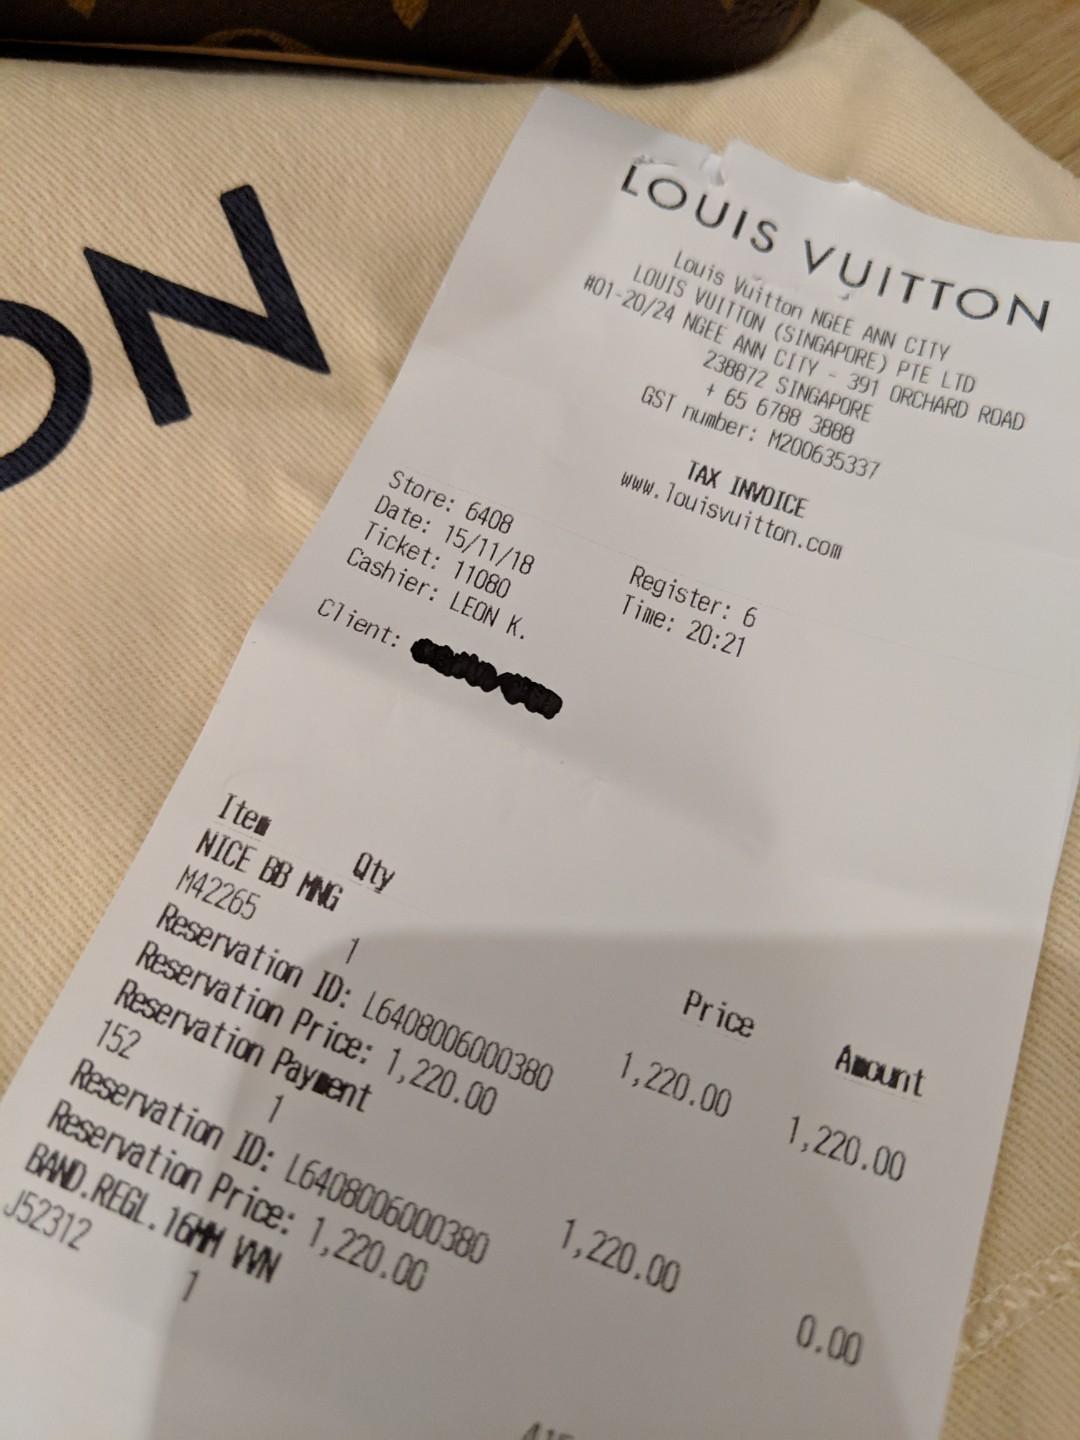 Louis Vuitton nice bb with full SG set receipt